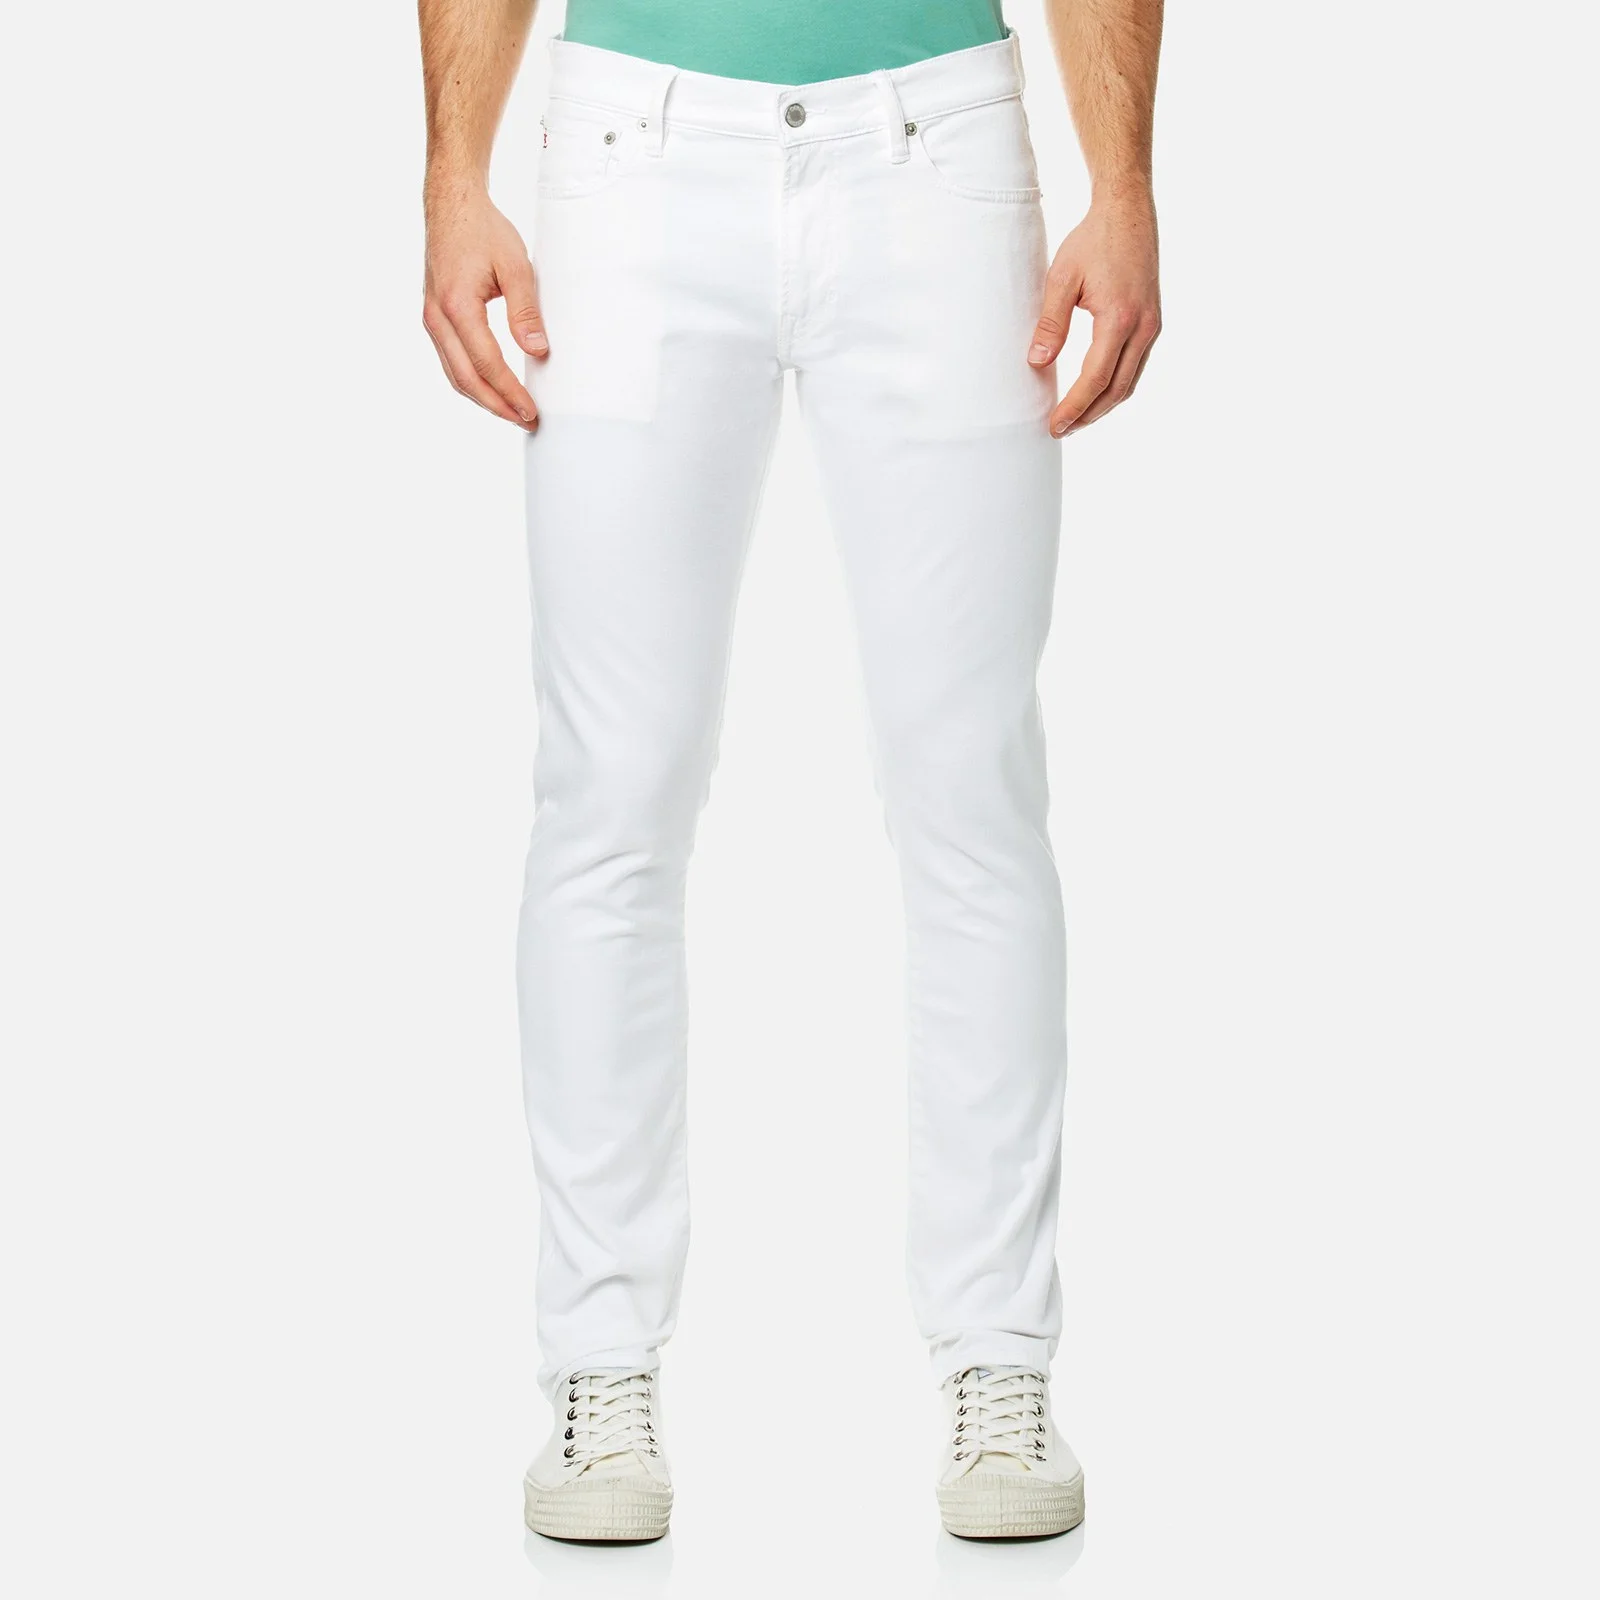 Polo Ralph Lauren Men's Varick Slim Fit Jeans - Pence Stretch Image 1